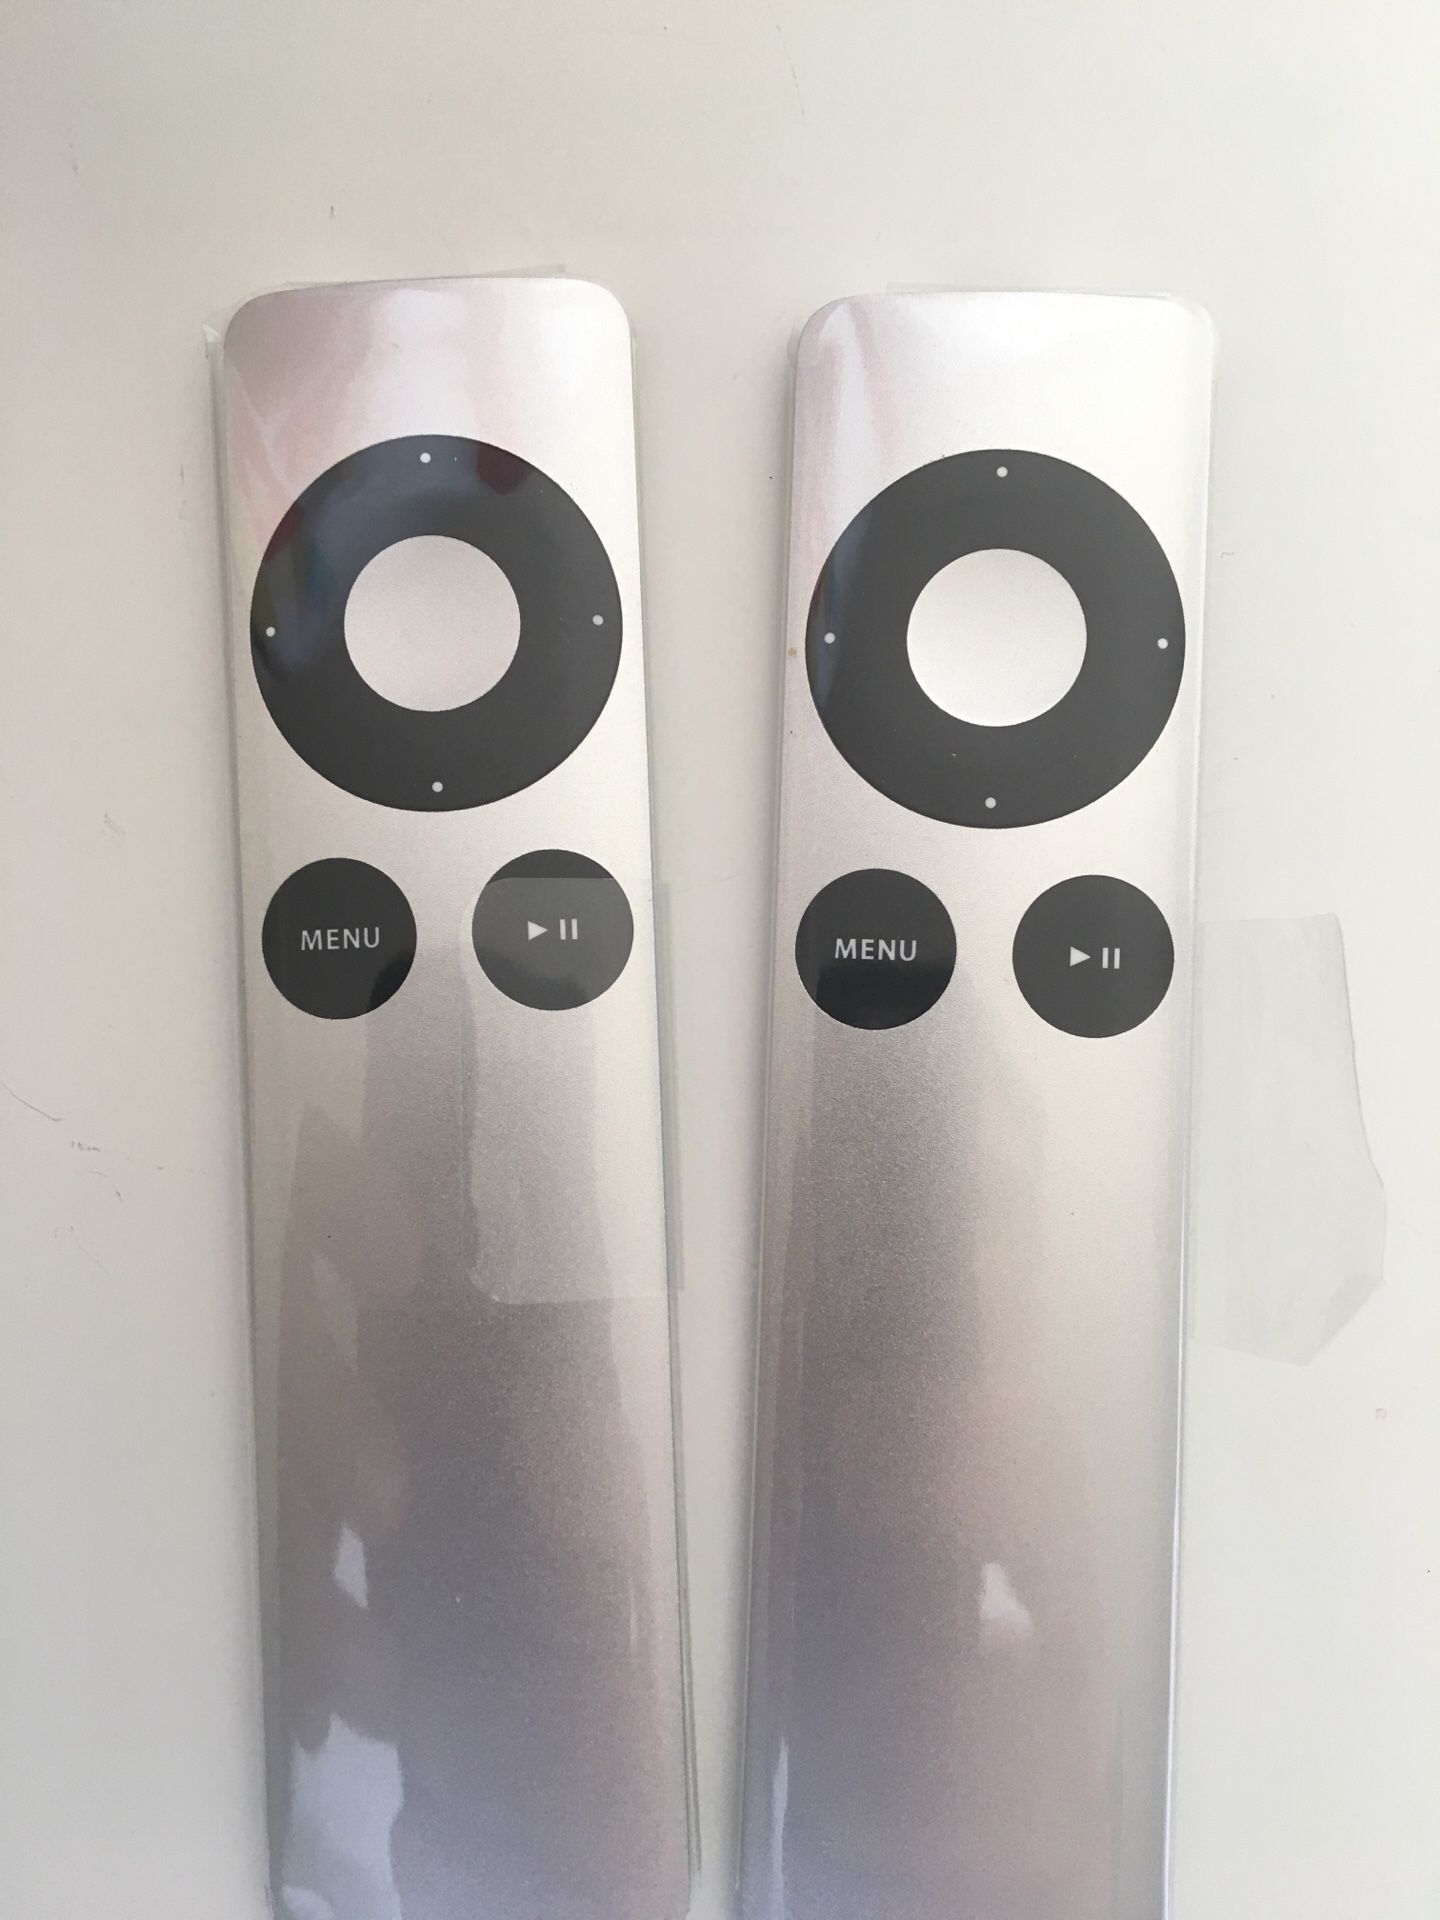 2 Apple TV Remotes